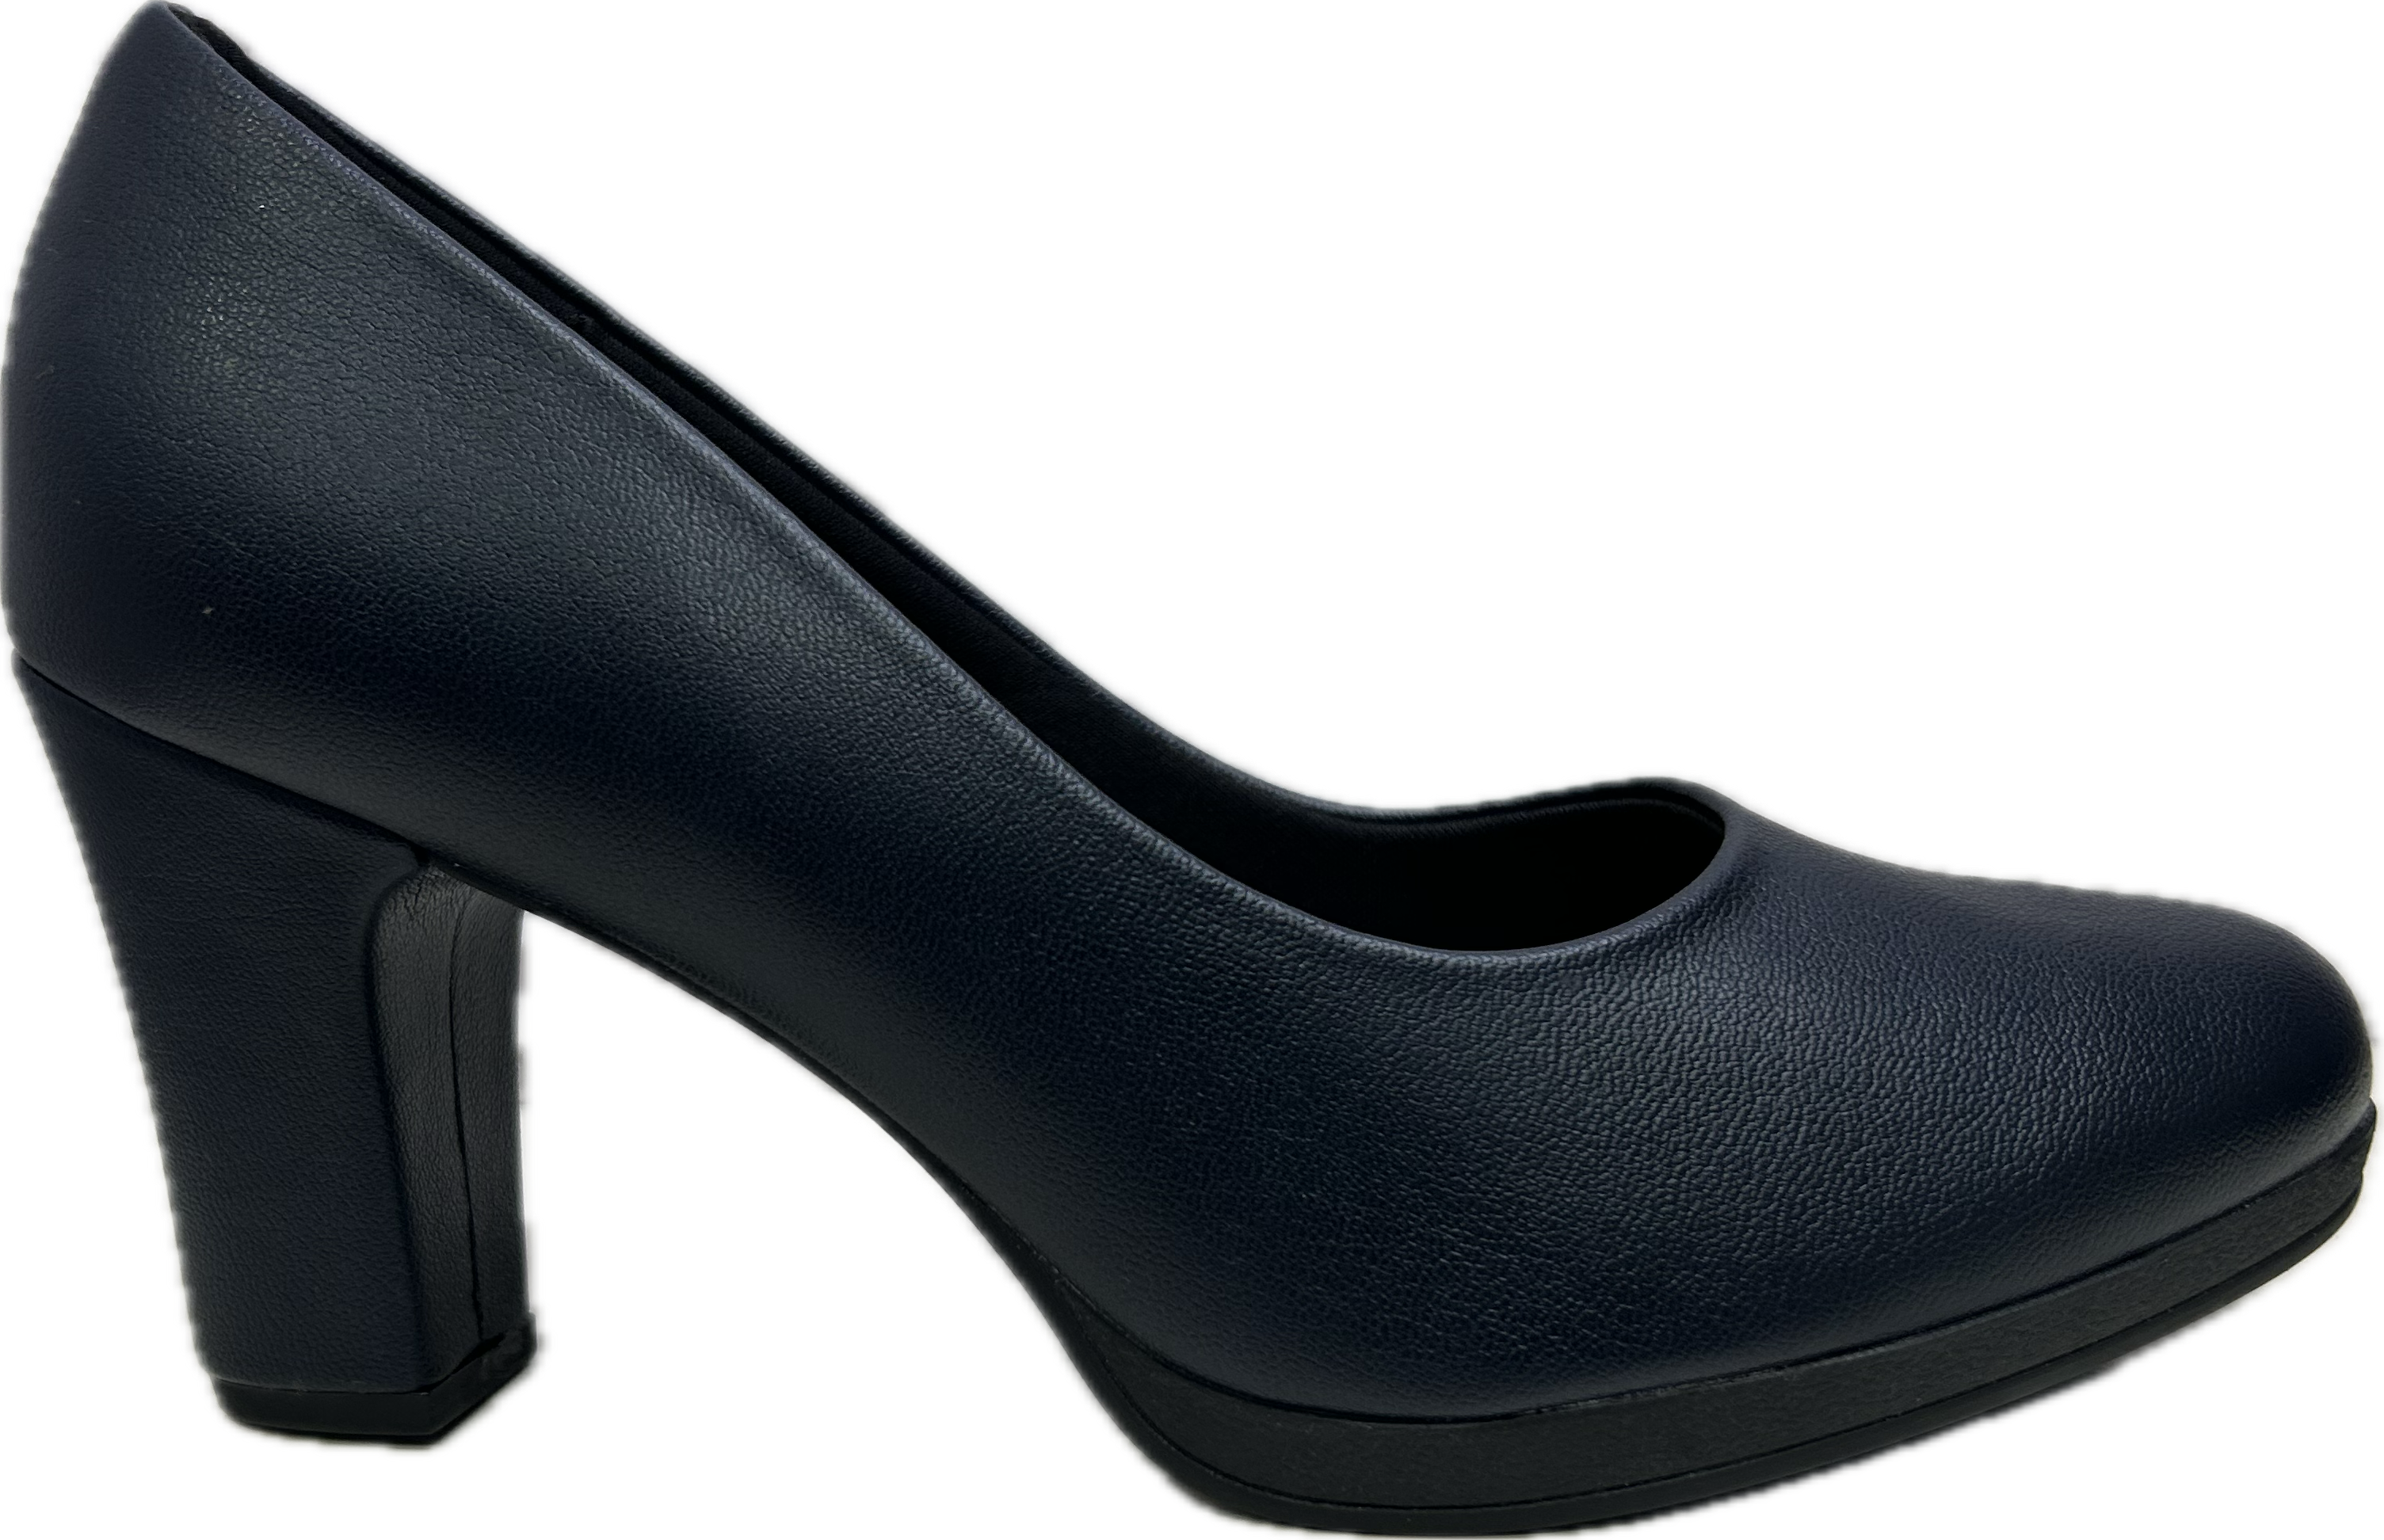 Sapato PROF liso salto alto com plataforma conforto AZUL